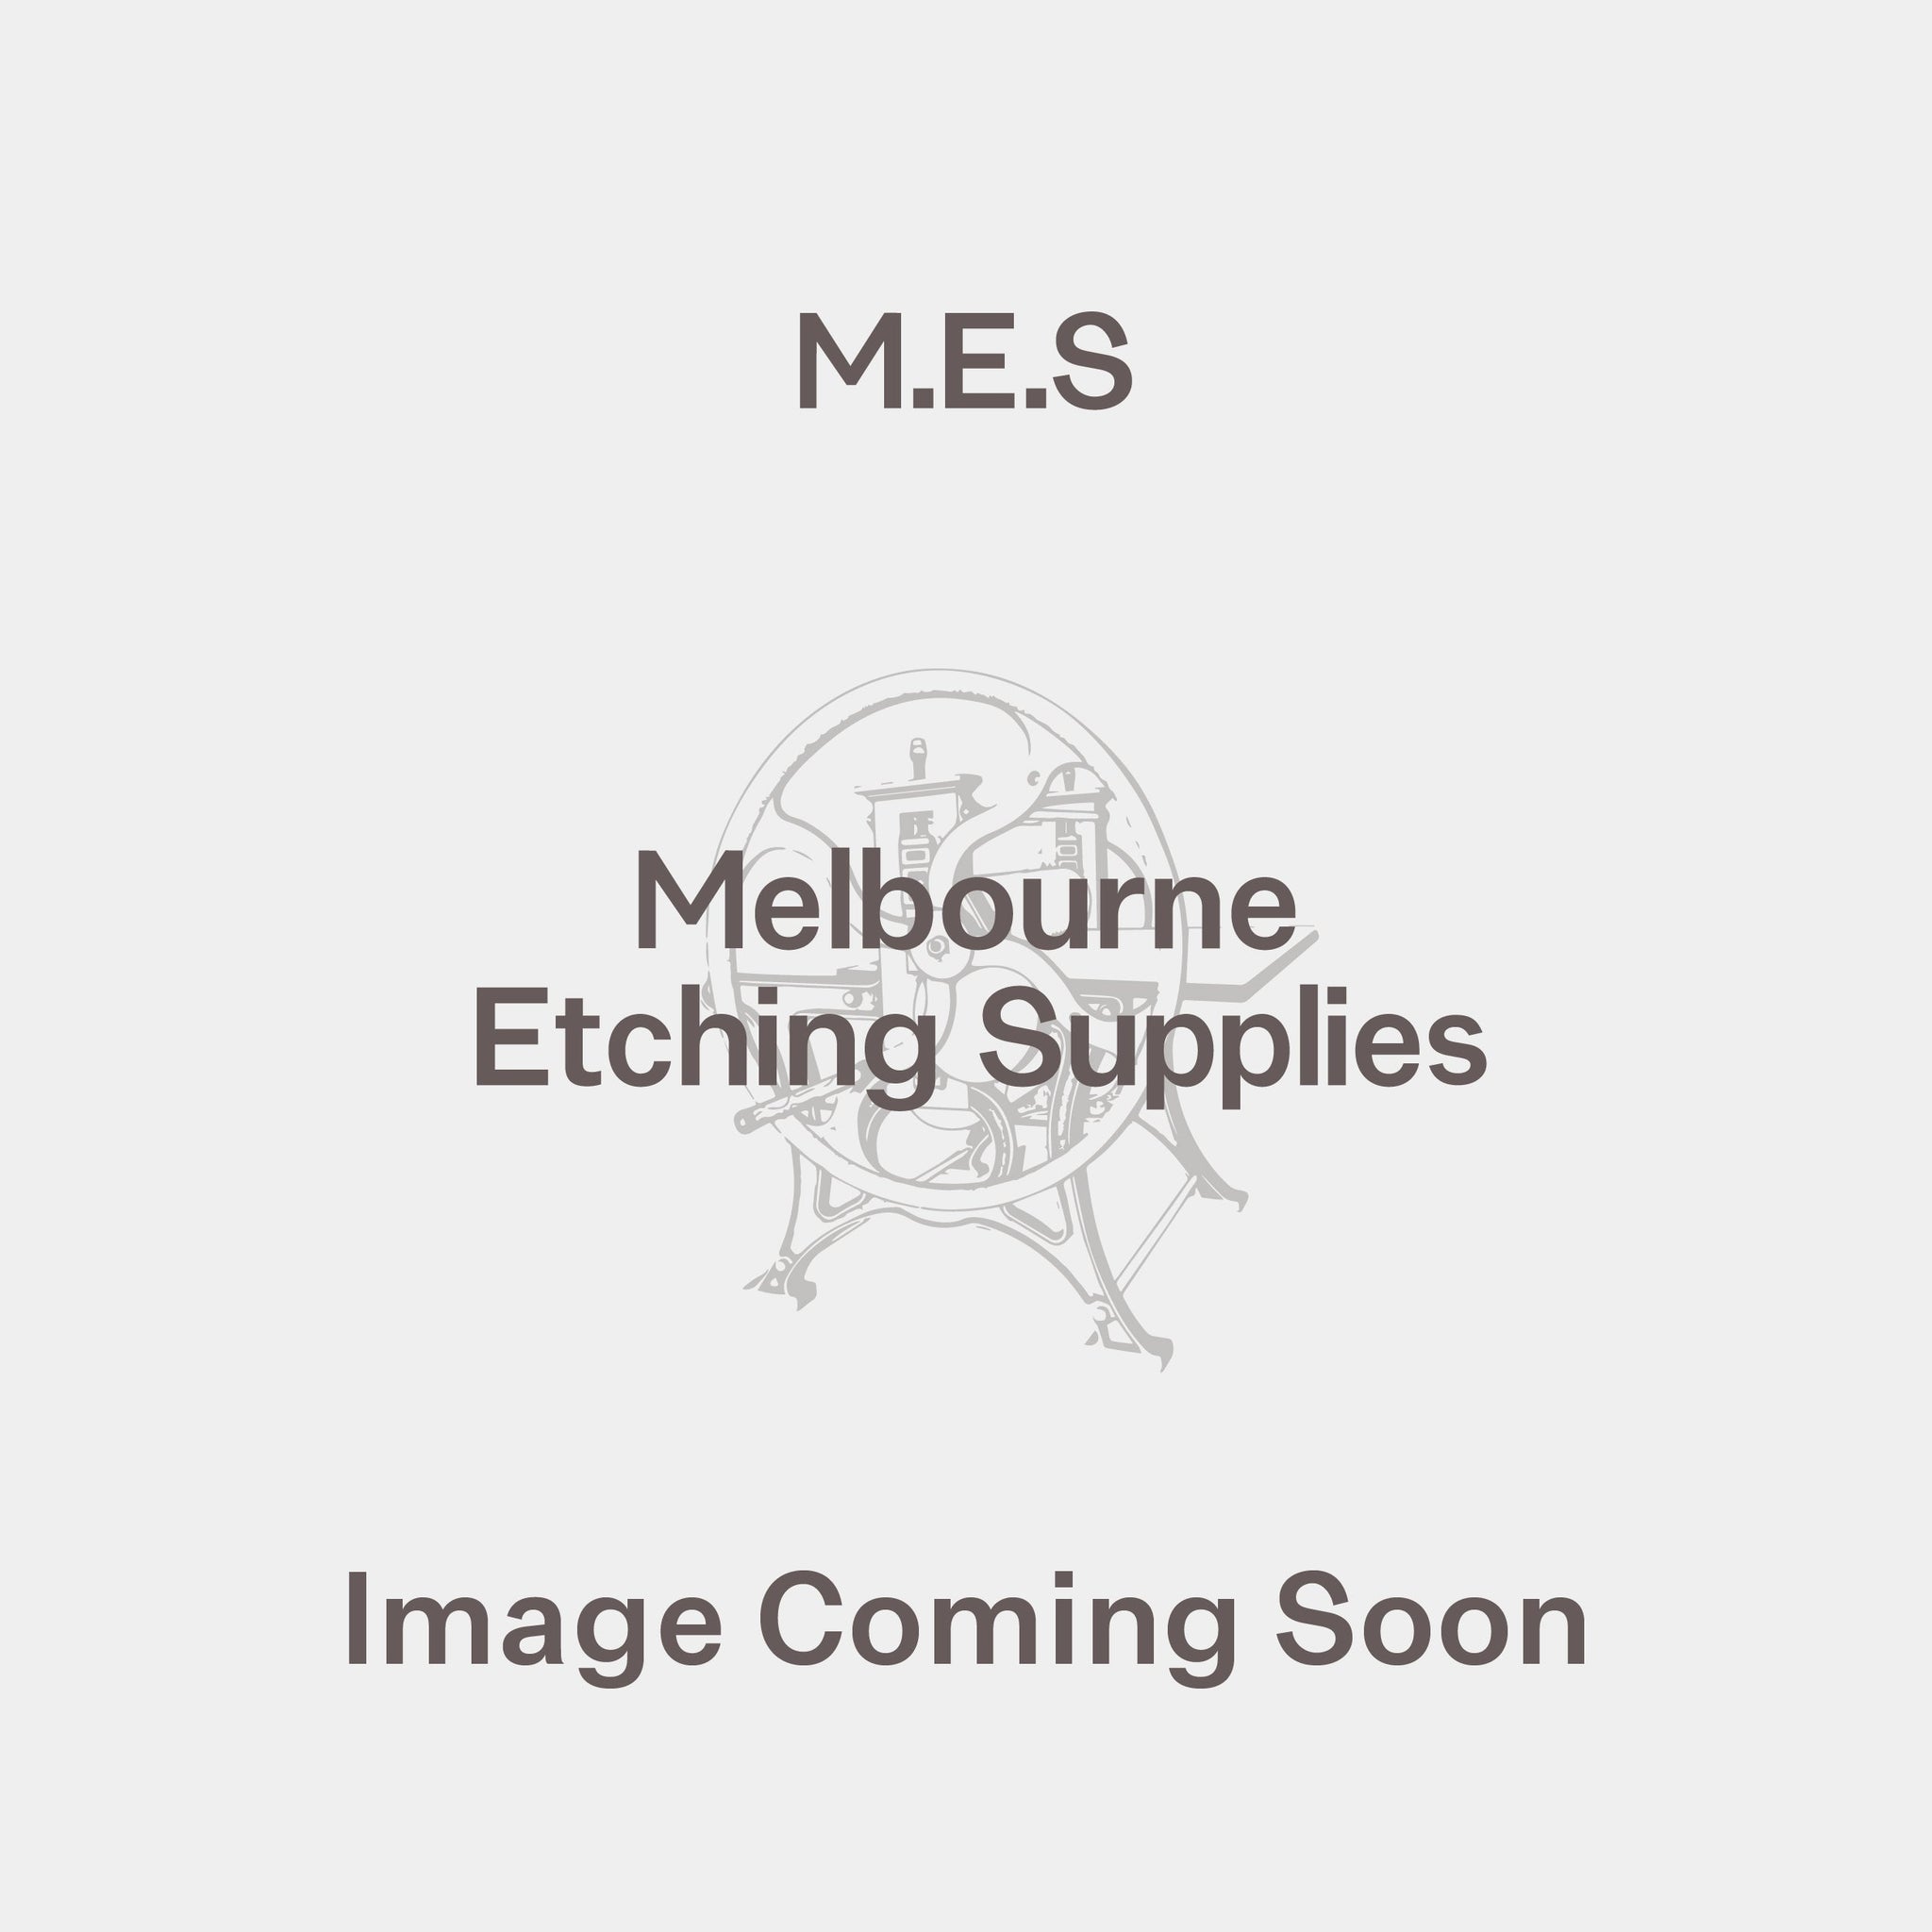 Sennelier Carnauba Wax 100g - Melbourne Etching Supplies